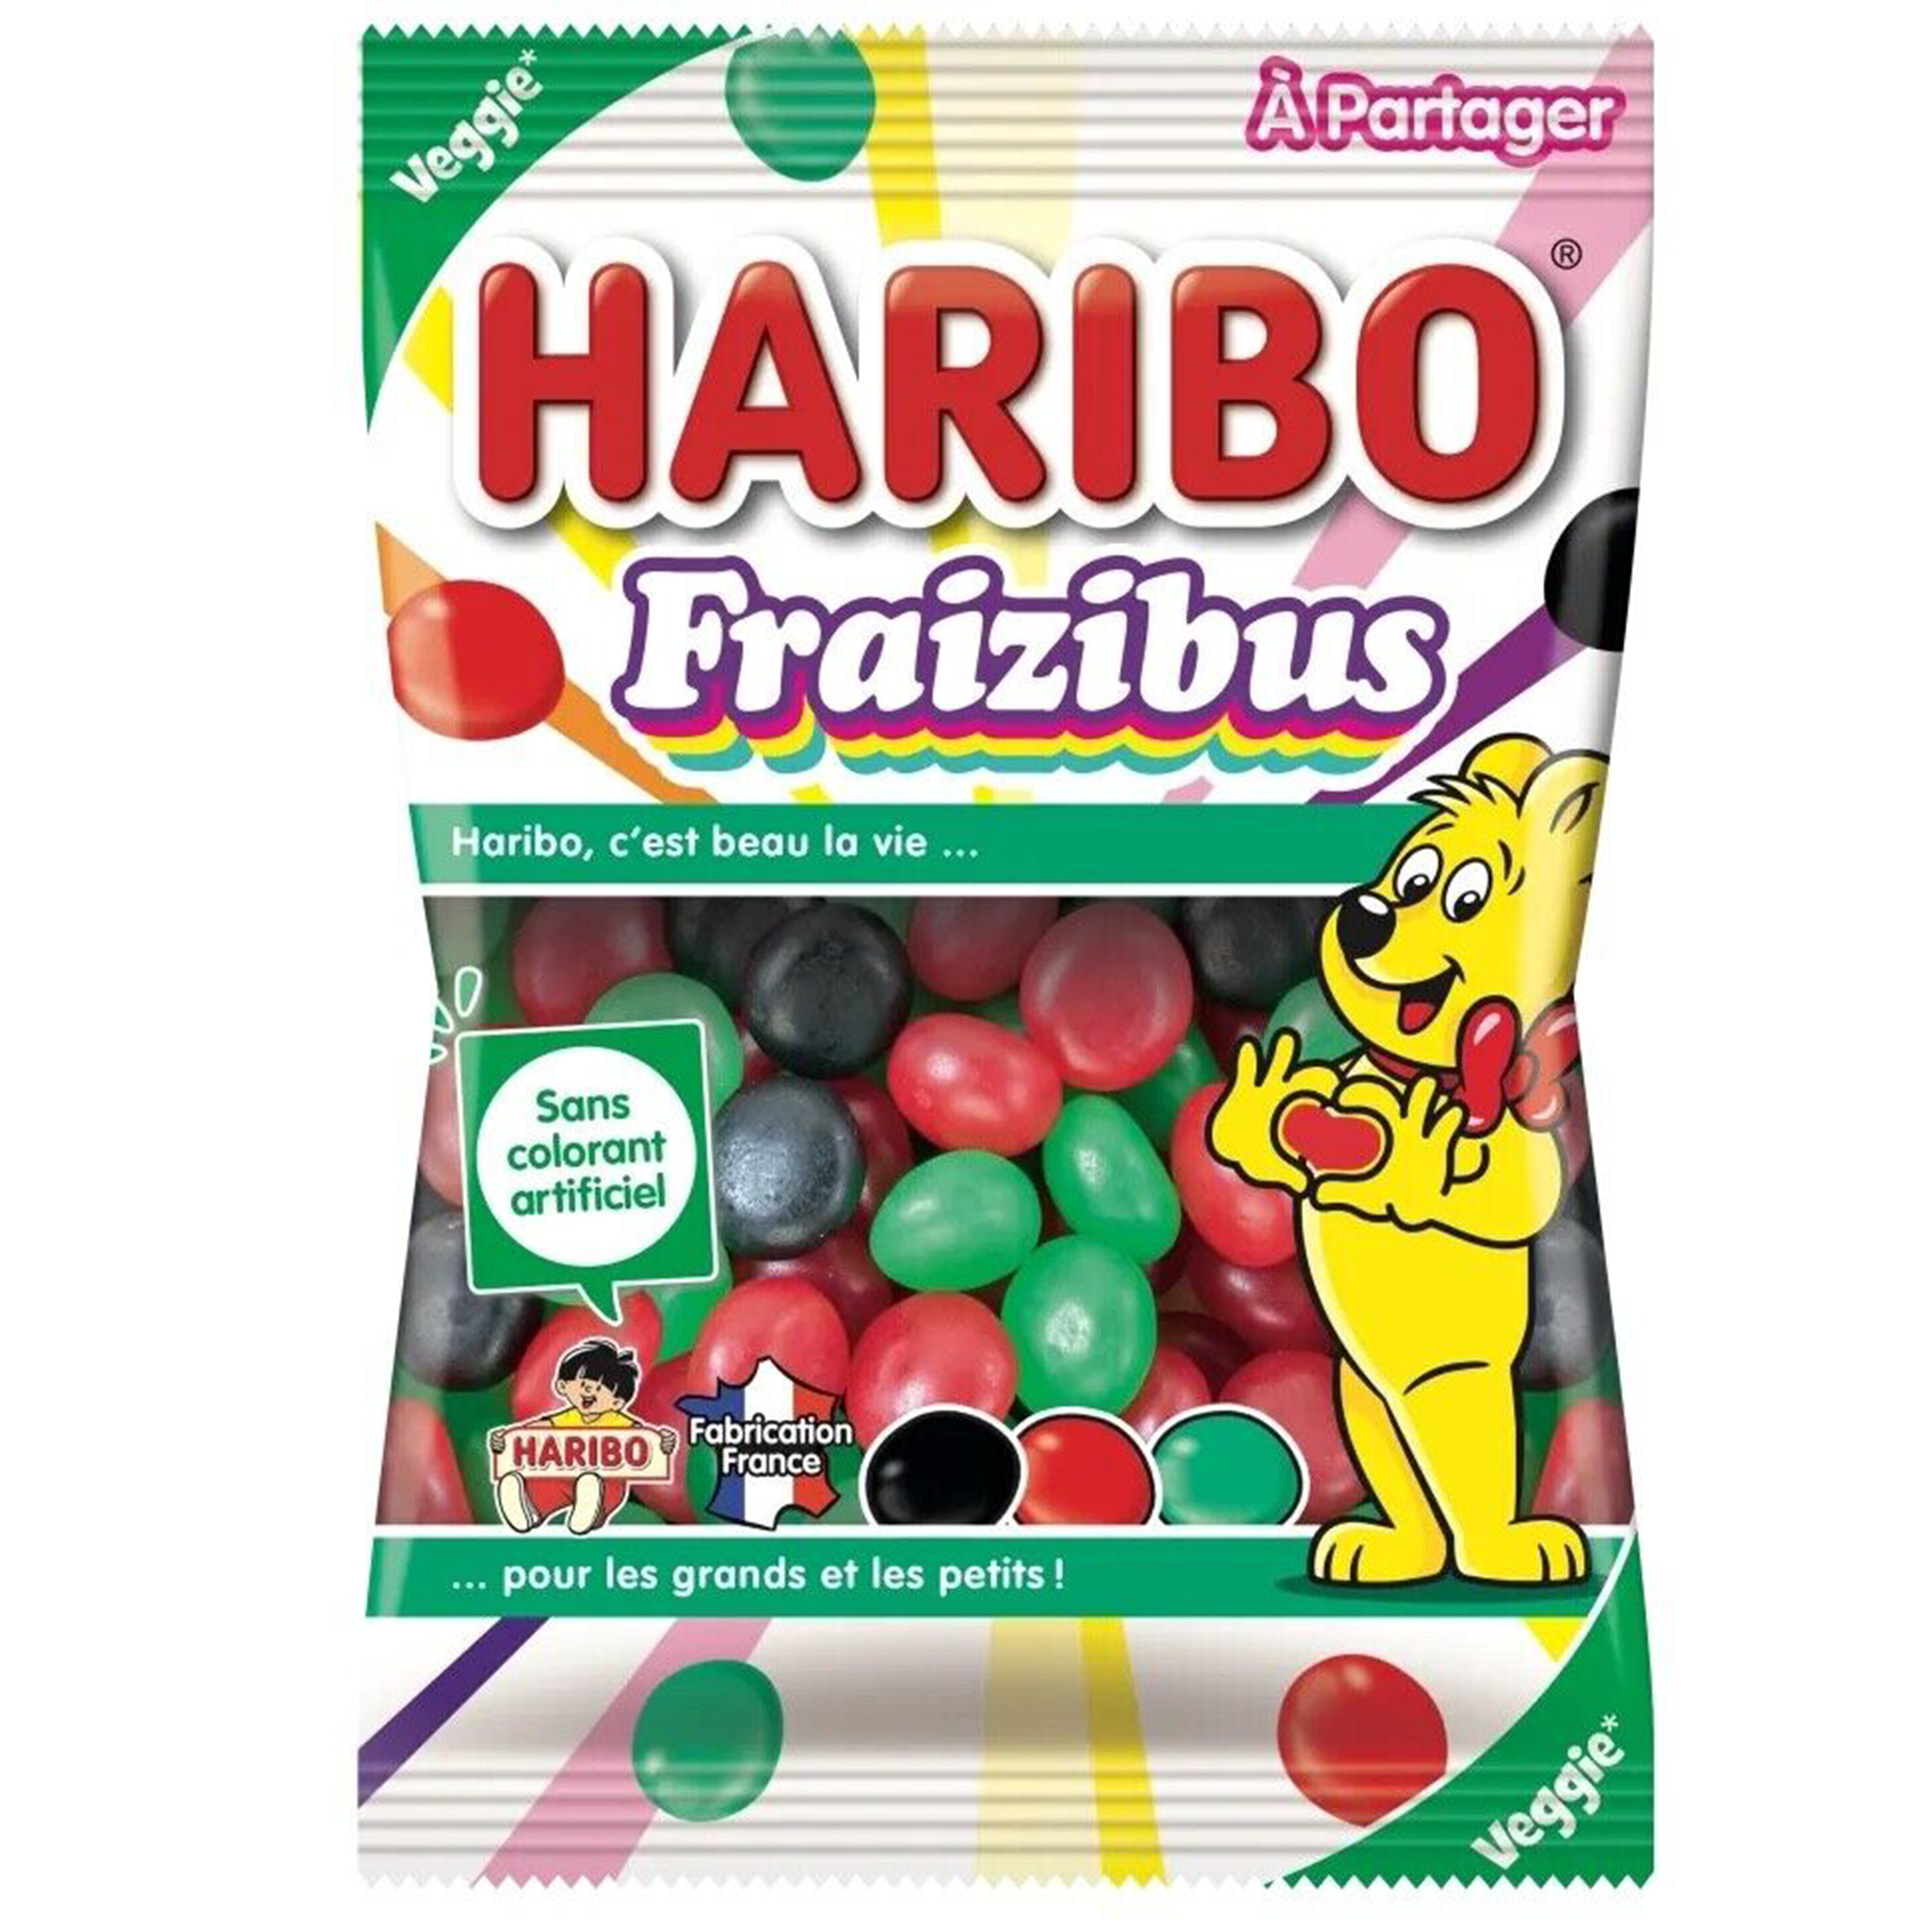 Haribo - Fraizibus (Europe)